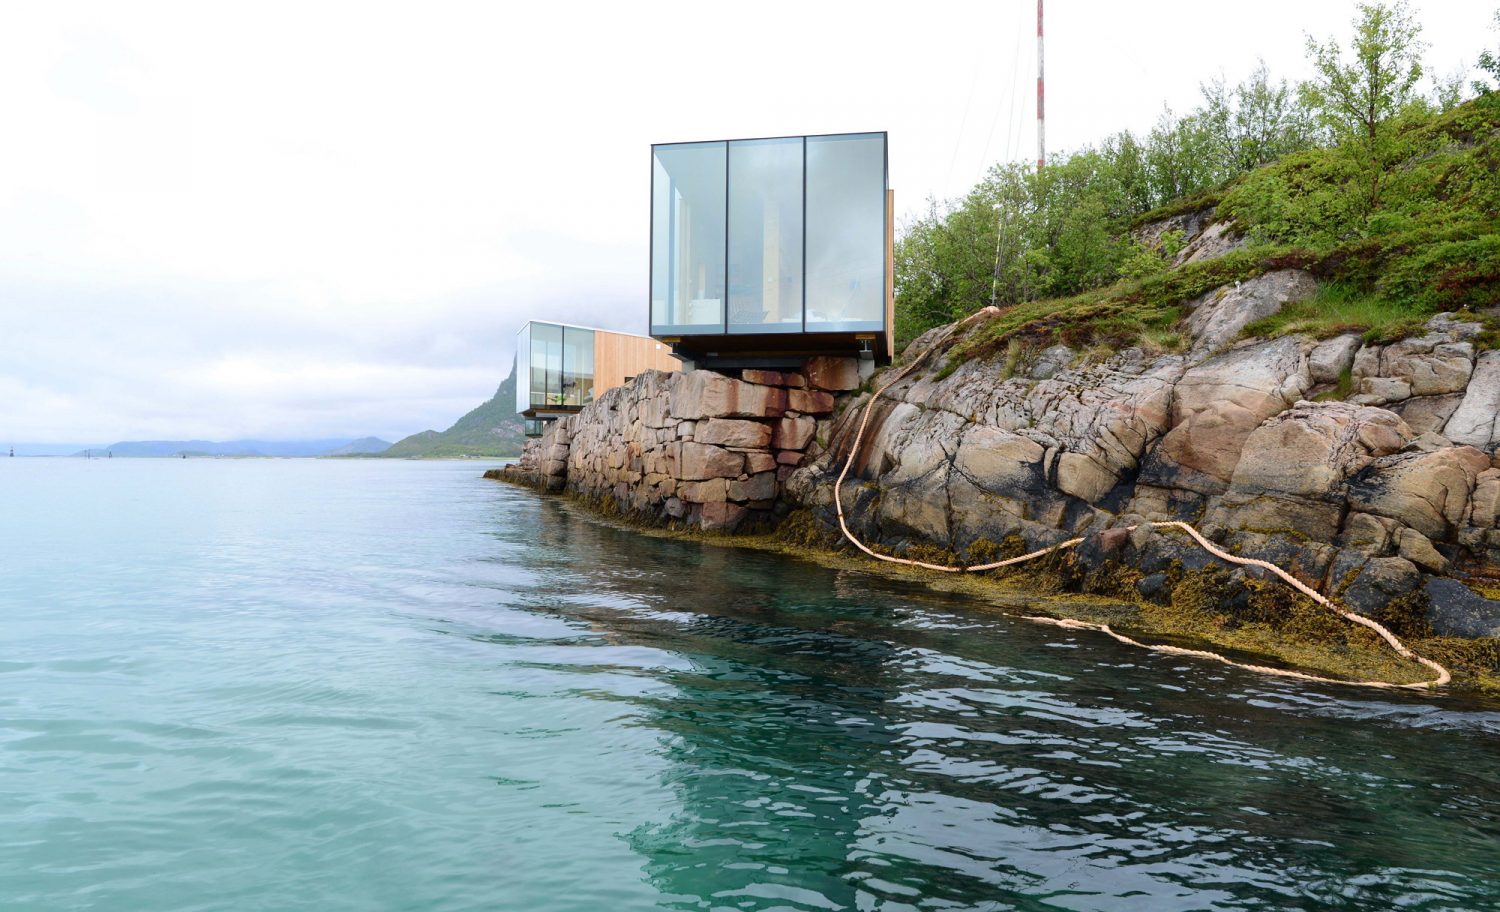 Manshausen | Glass and Timber Cabins by Stinessen Arkitektur